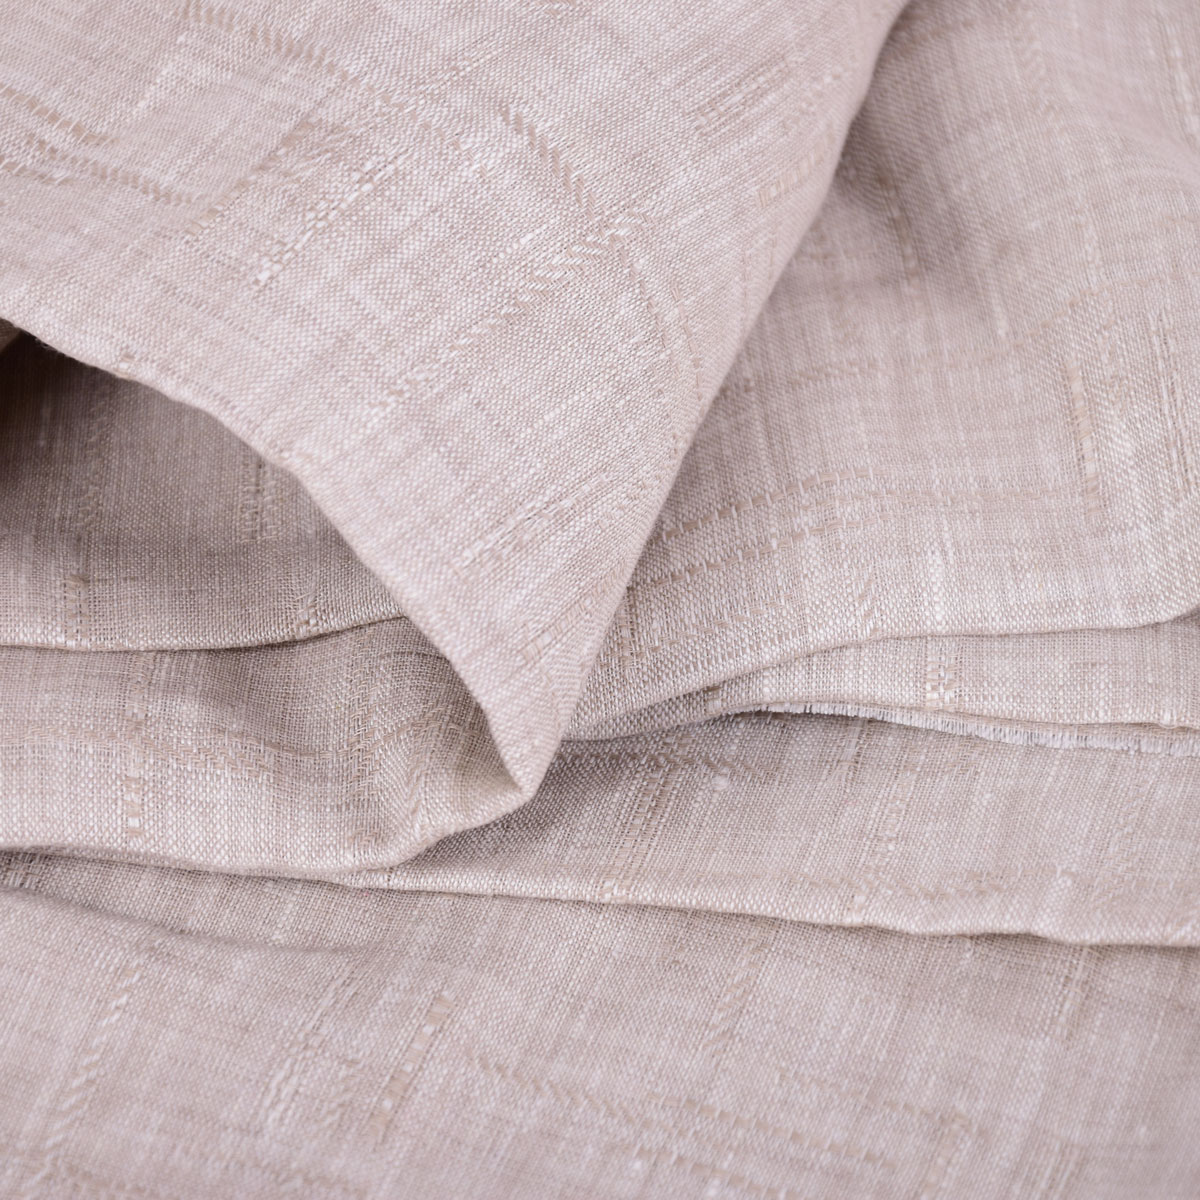 Plain 36-42 Linen Cotton Fabric, GSM: 150-350, Packaging Type